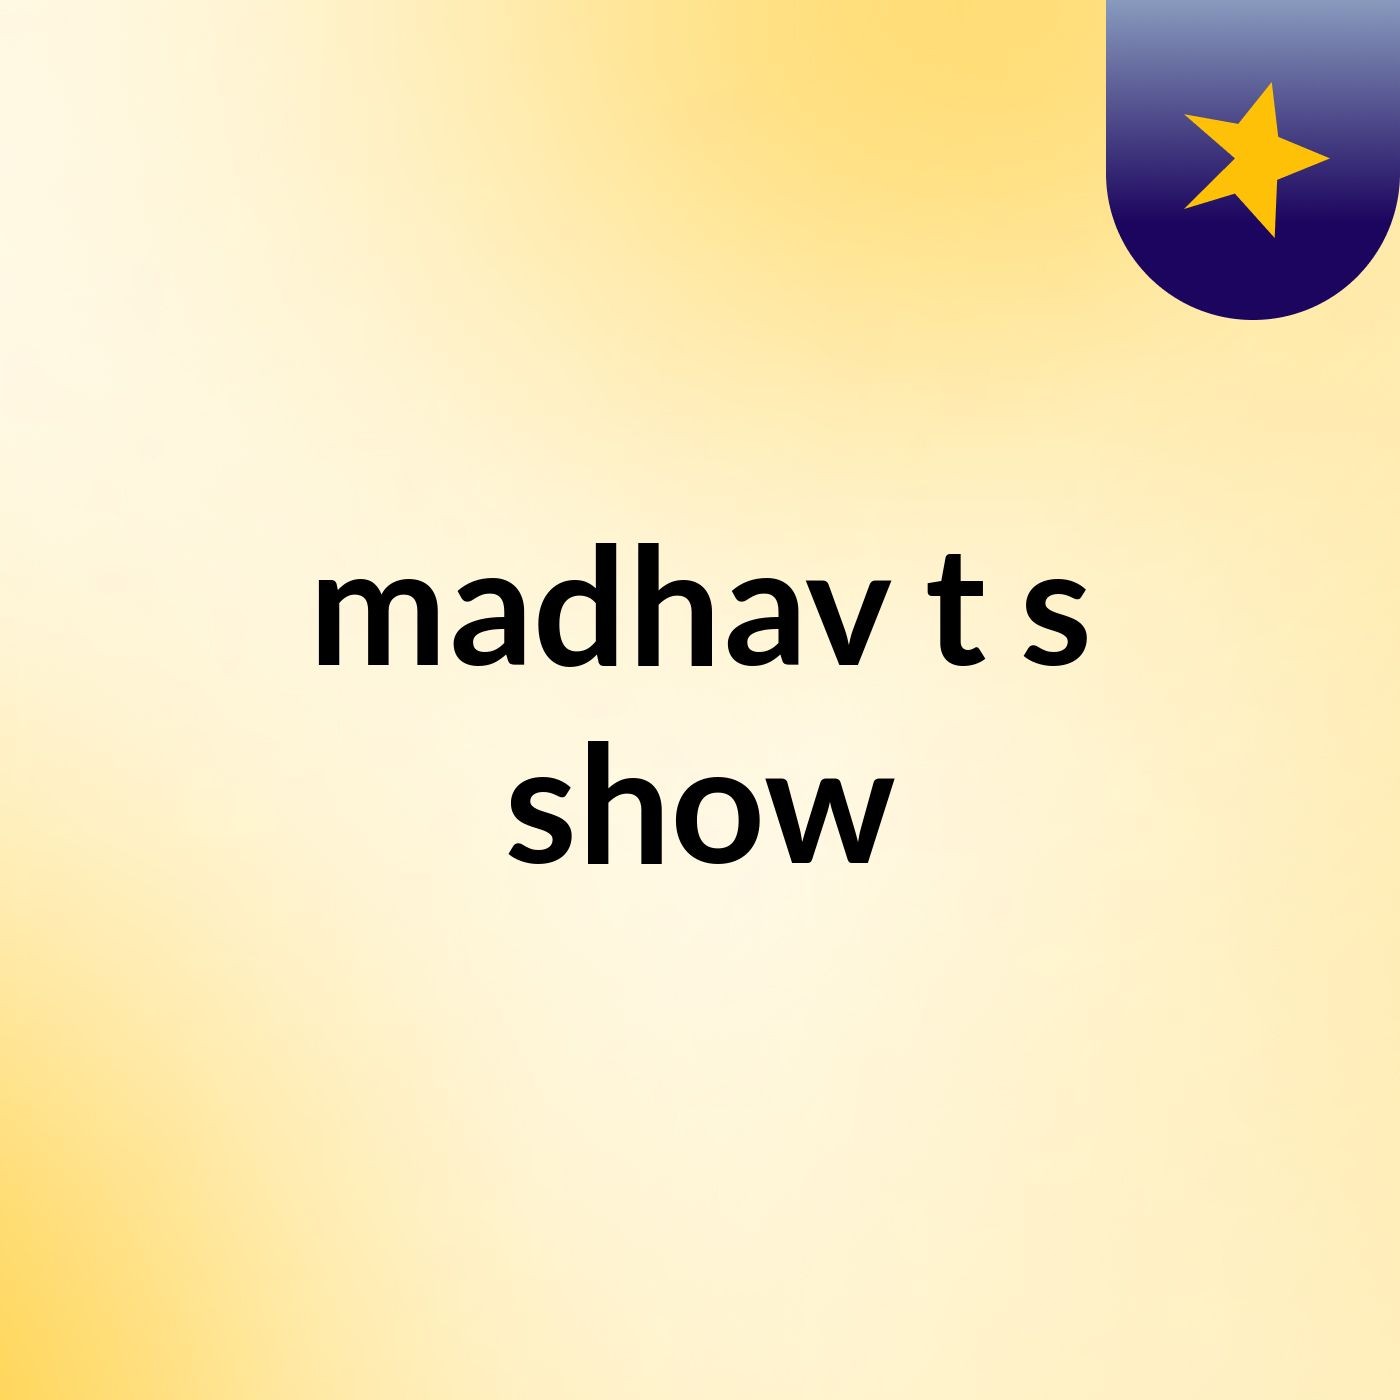 madhav t's show